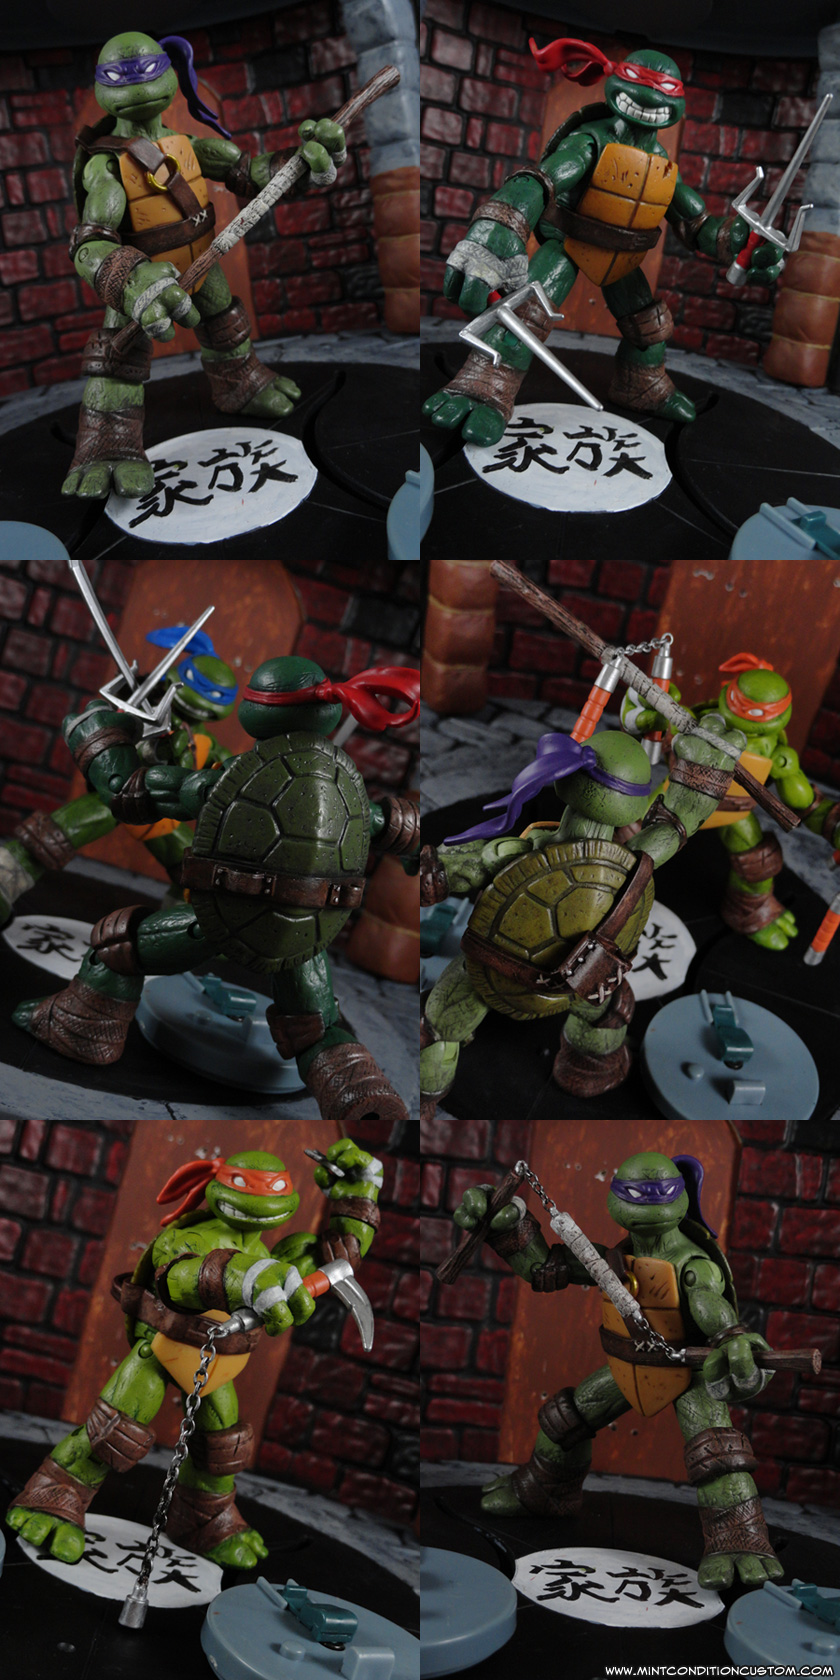 Custom Repainted Nickelodeon Teenage Mutant Ninja Turtles Action Figure Set